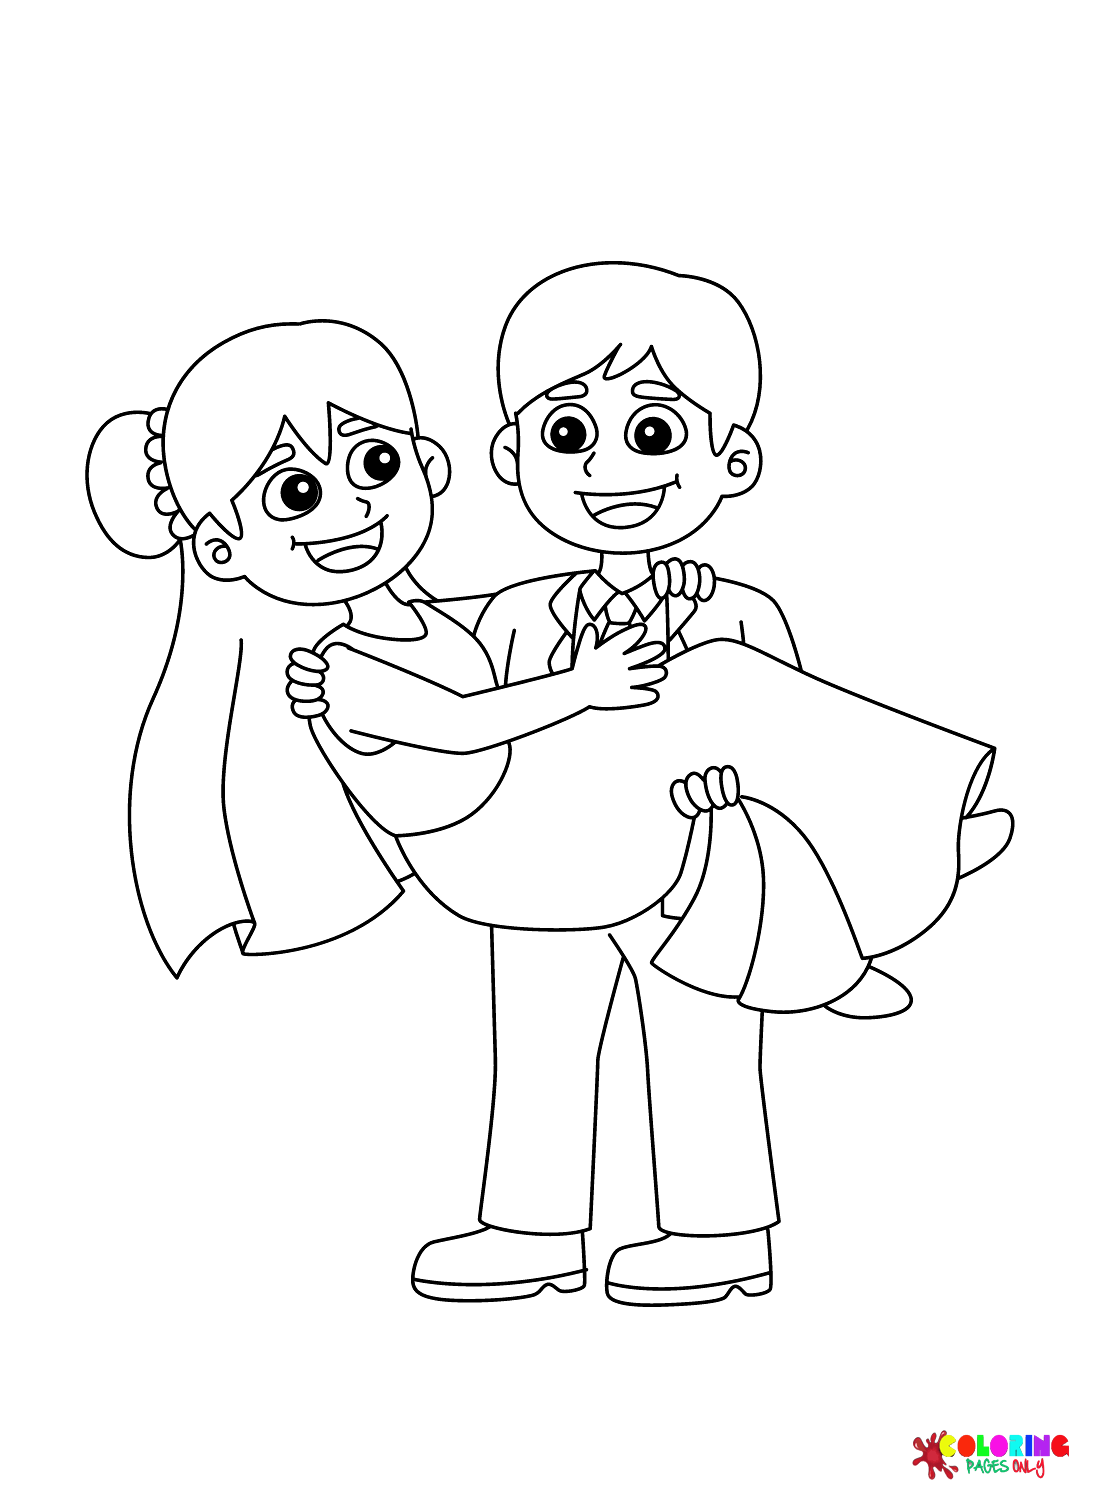 Happy Bride and Groom Coloring Page